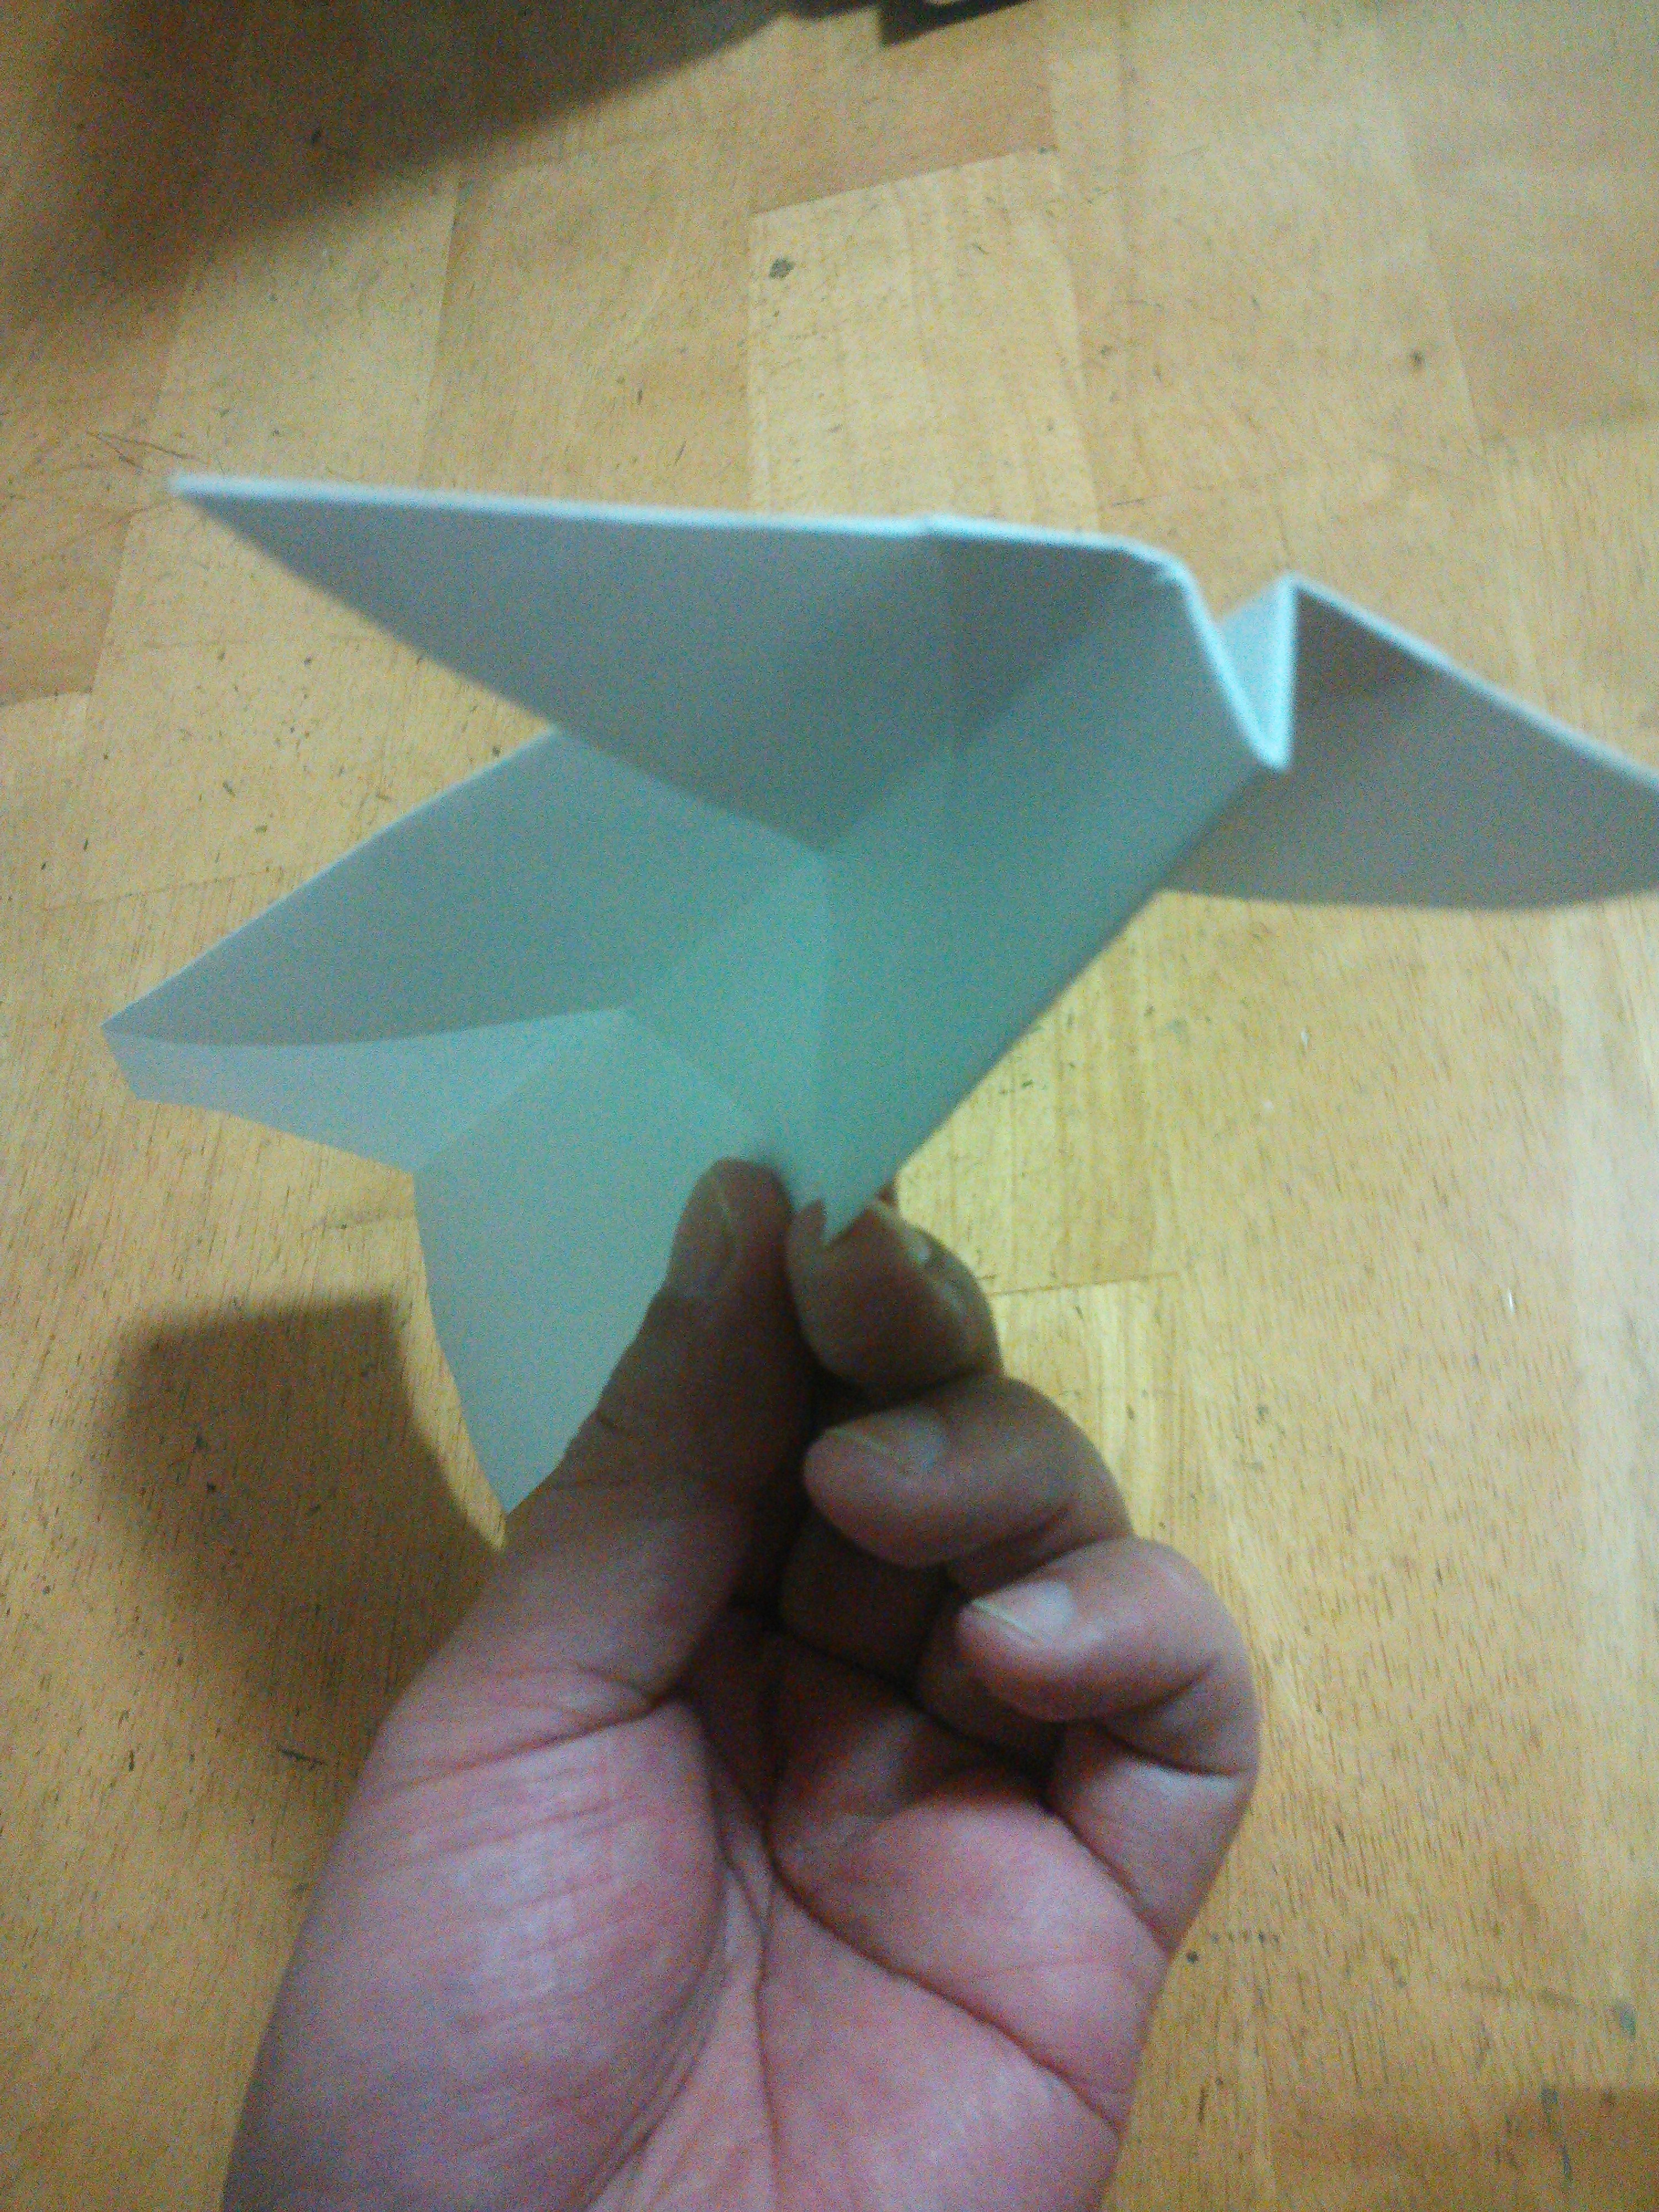 飛行機 折り紙